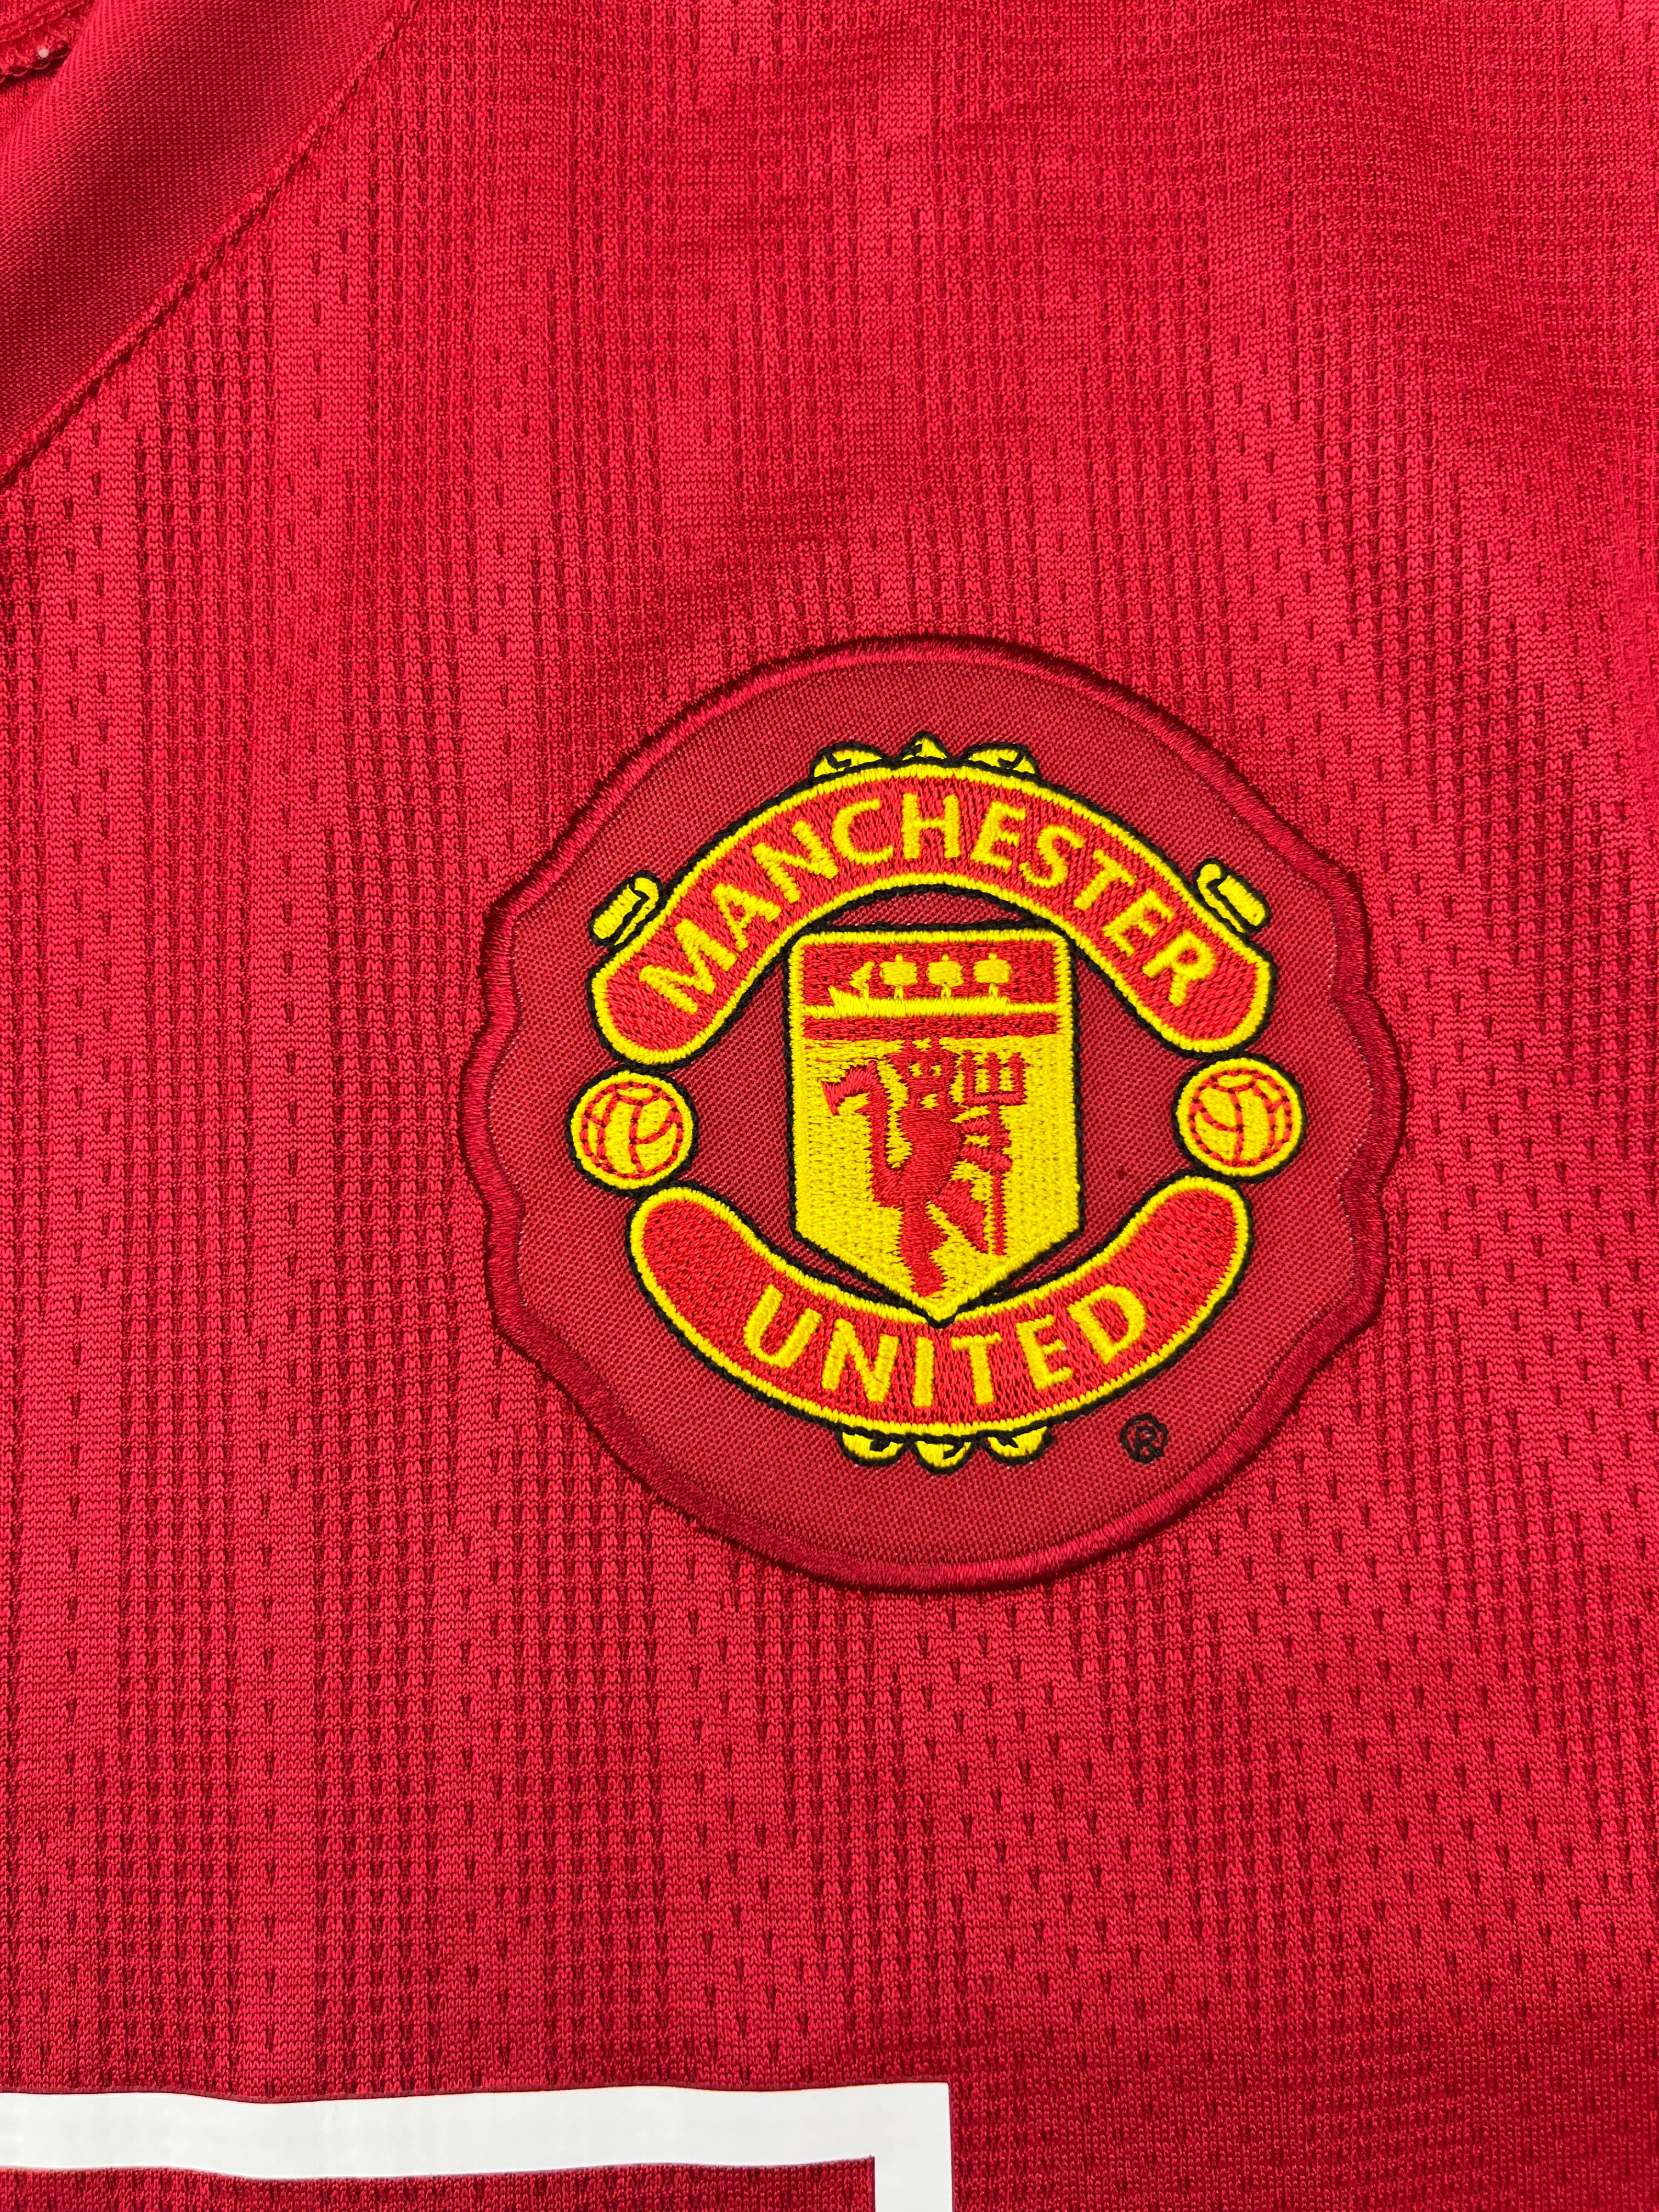 2007/09 Manchester United Home Shirt (XXL) 9/10